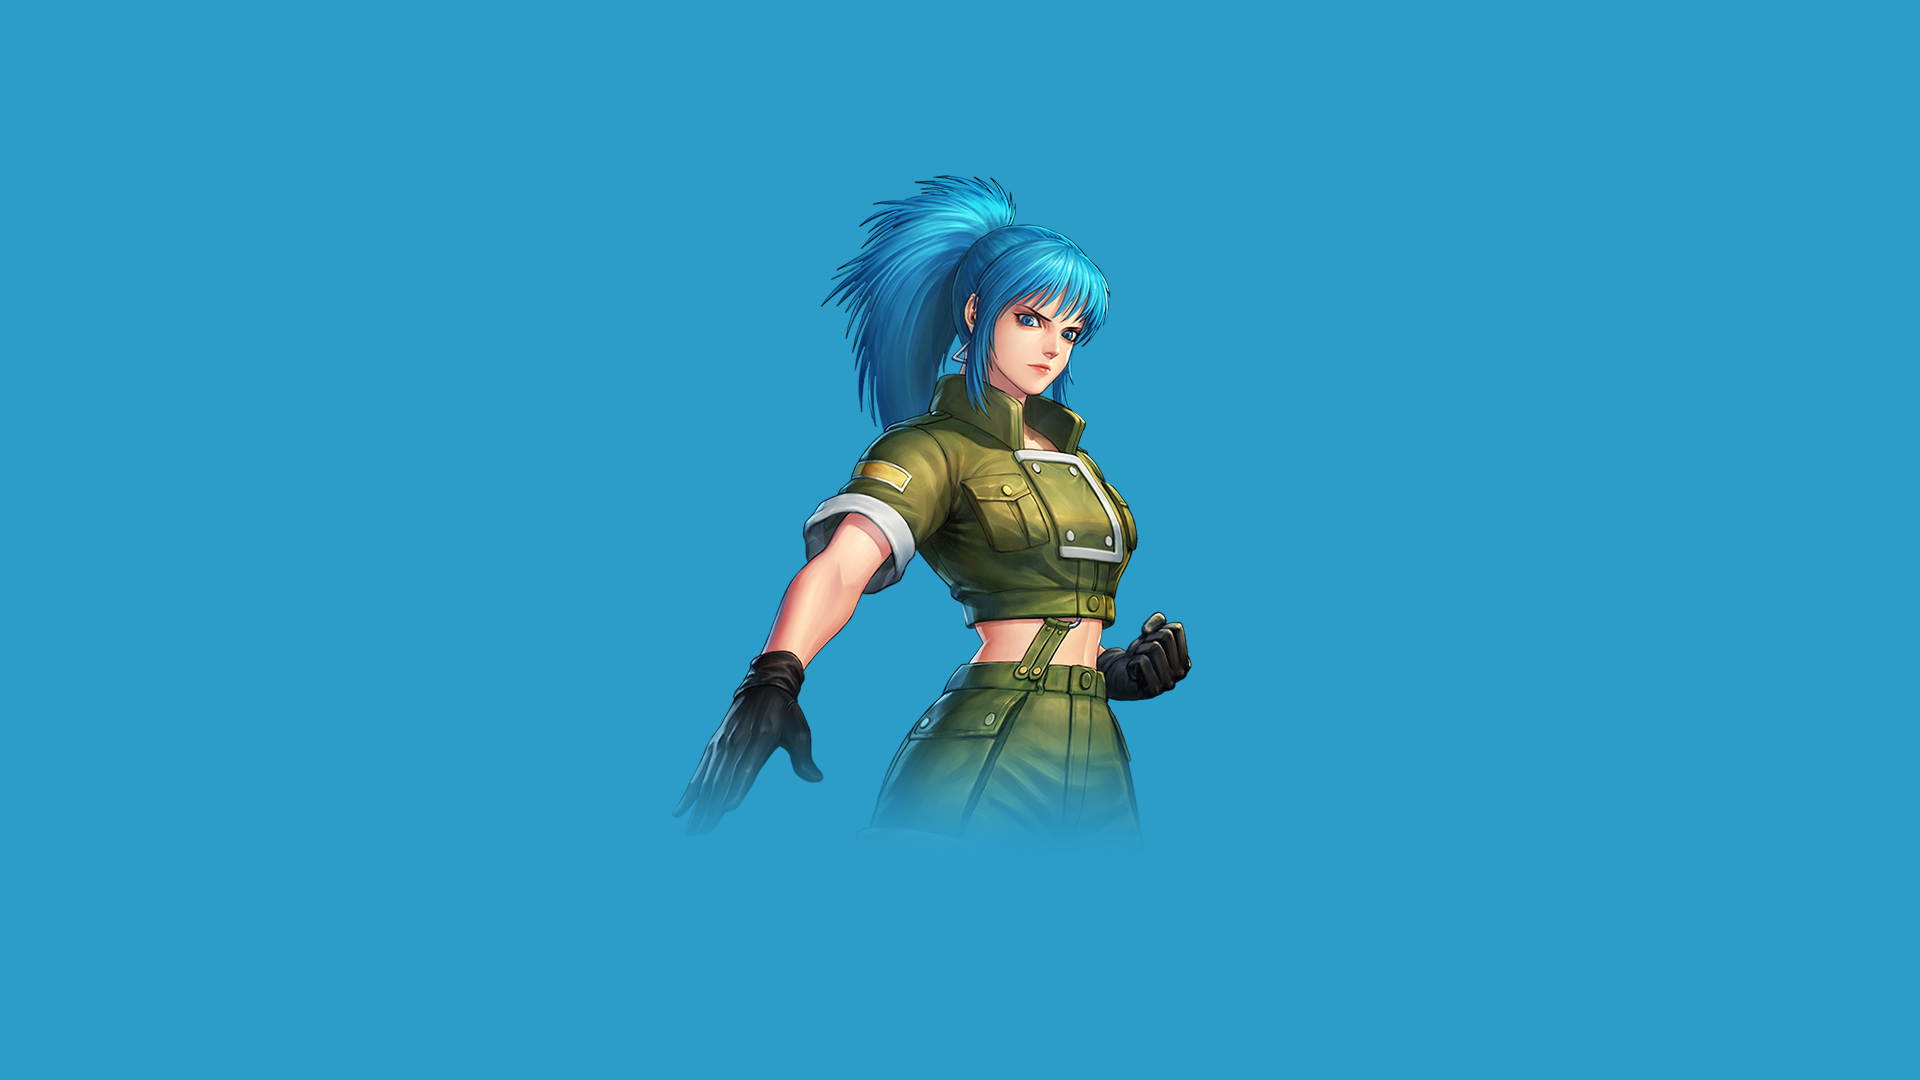 Leona Heidern King Of Fighters Video Games Video Game Characters Video Game Girls Blue Hair Ponytail 1920x1080